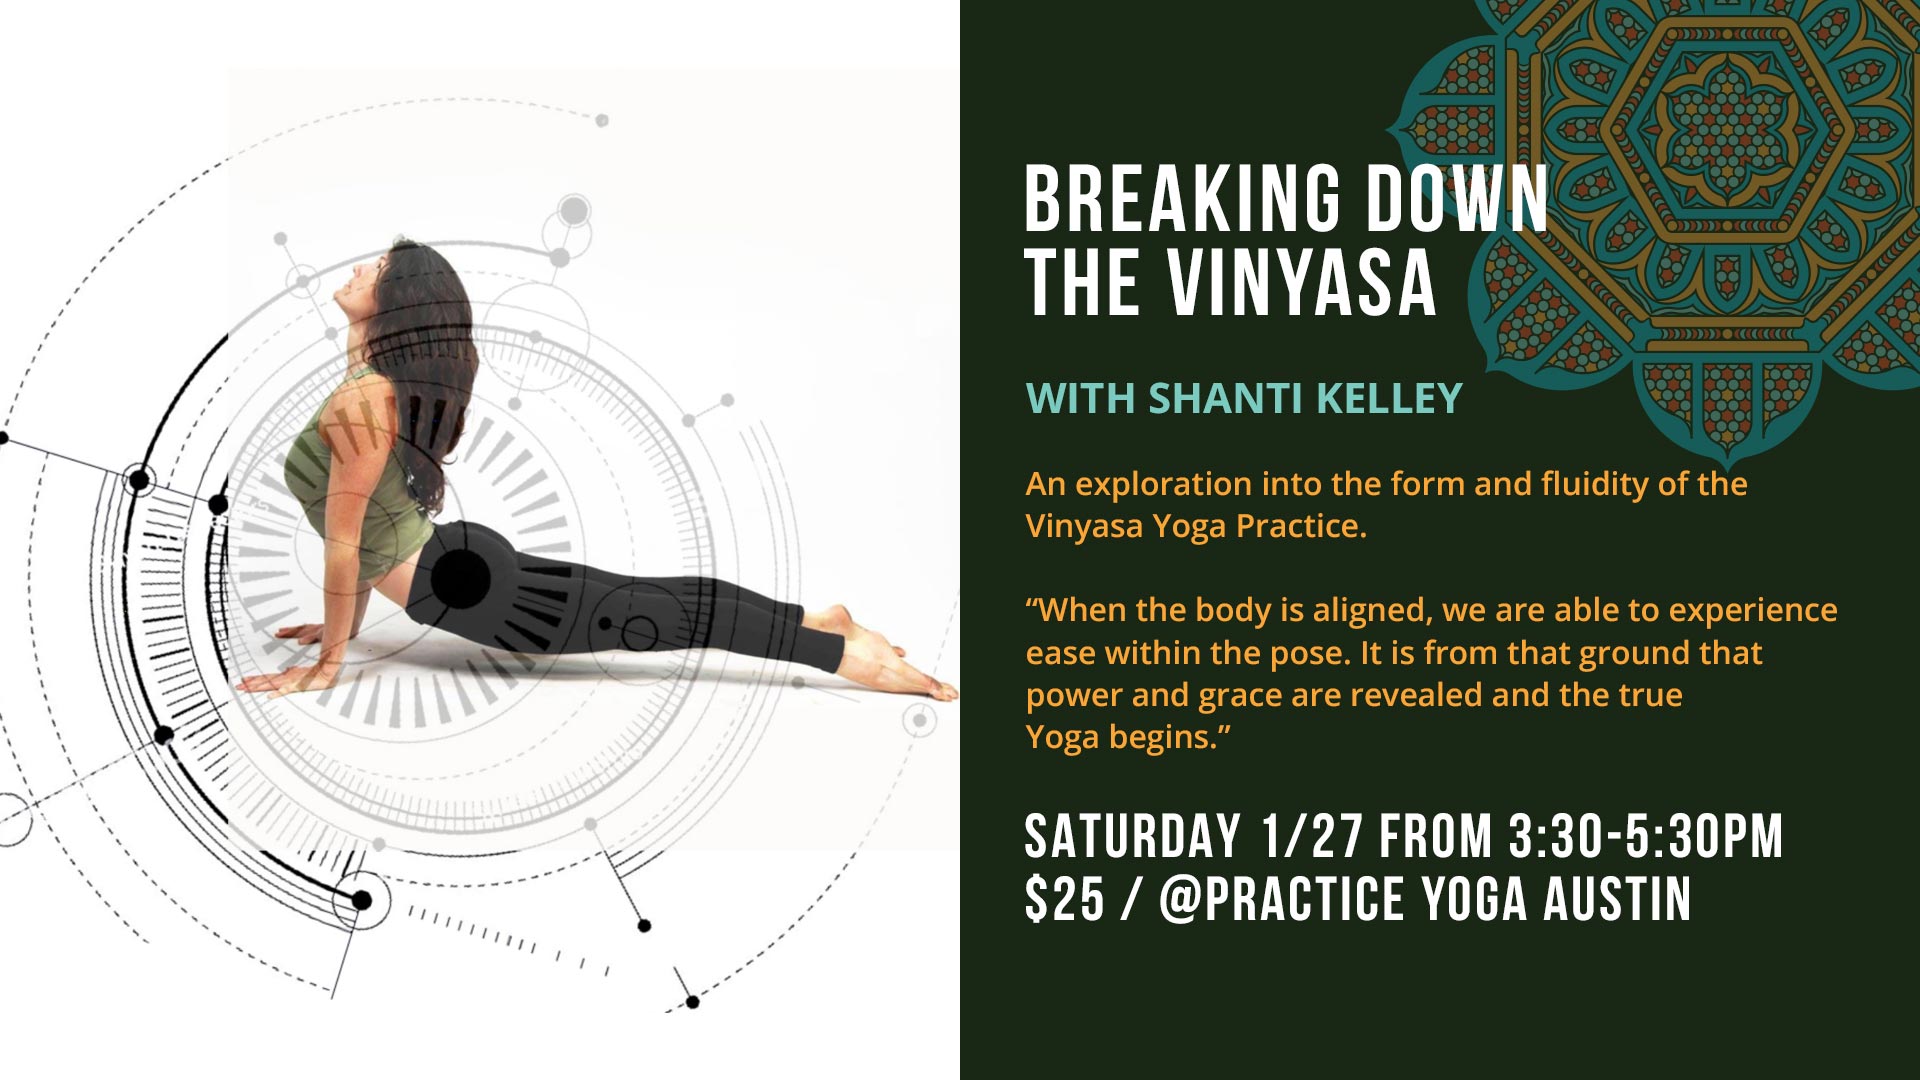 Breaking Down the VInyasa with Shanti Kelley